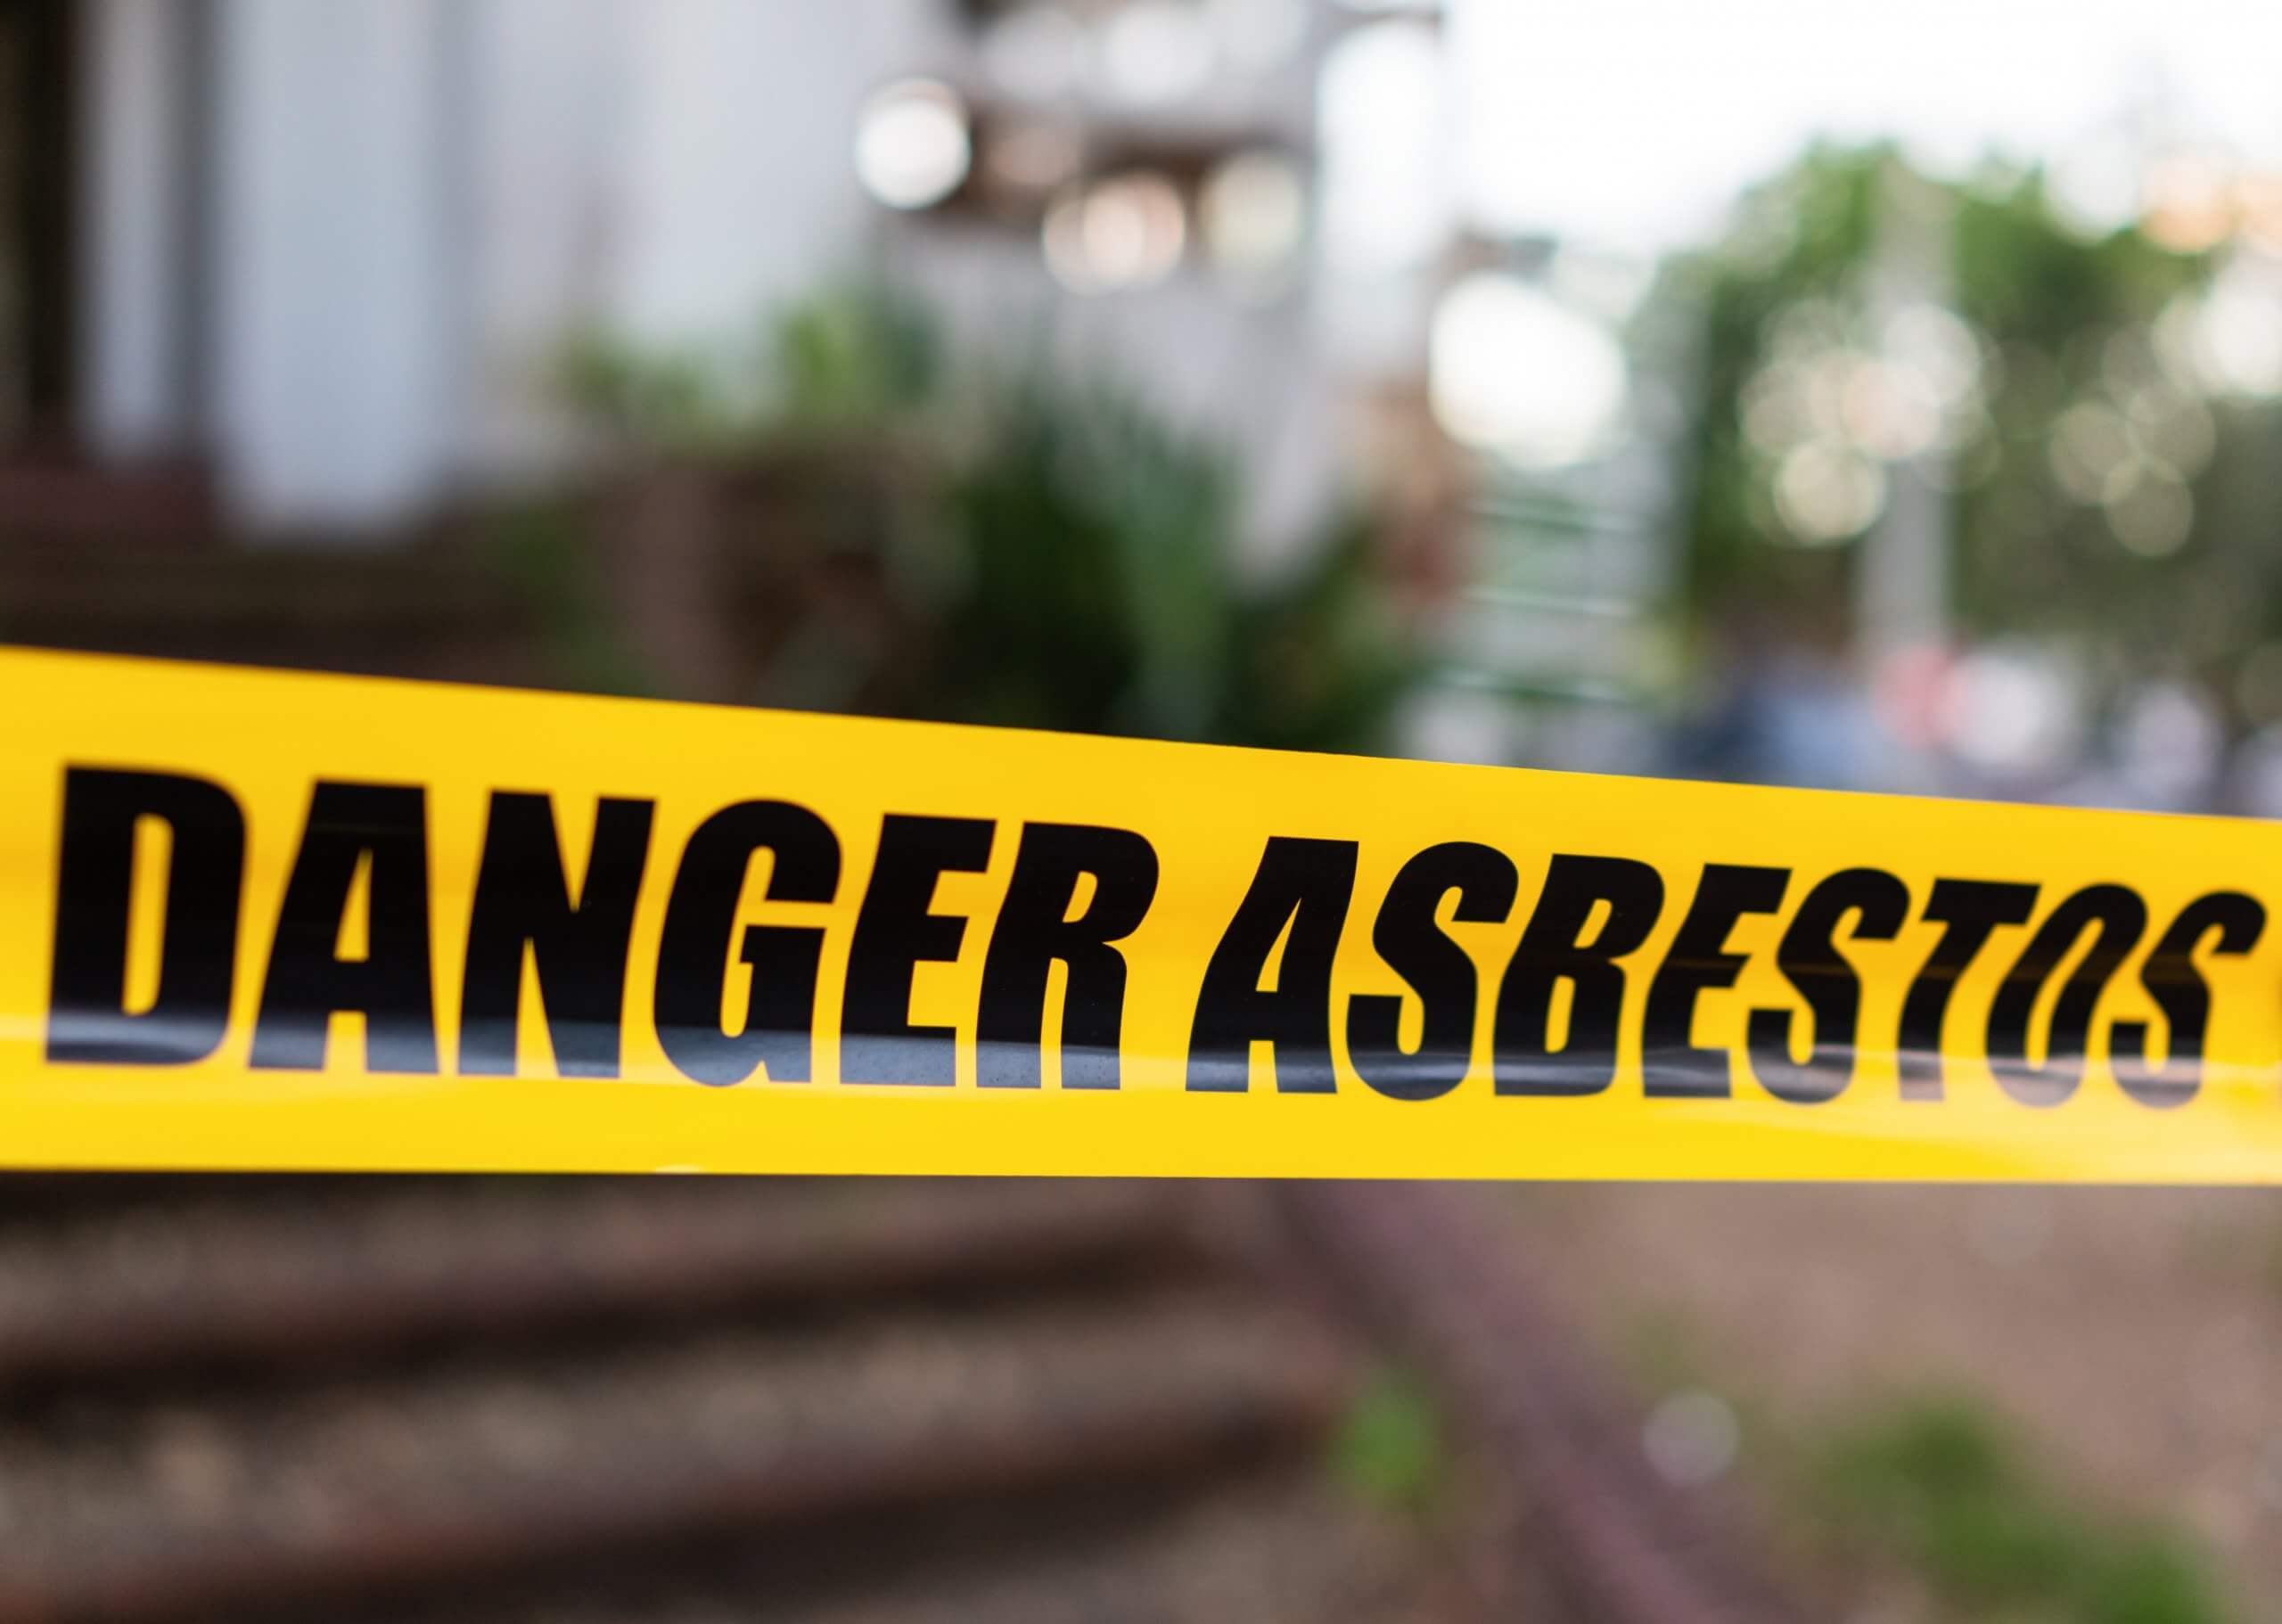 Global Asbestos Awareness Week: 1-7 April 2022